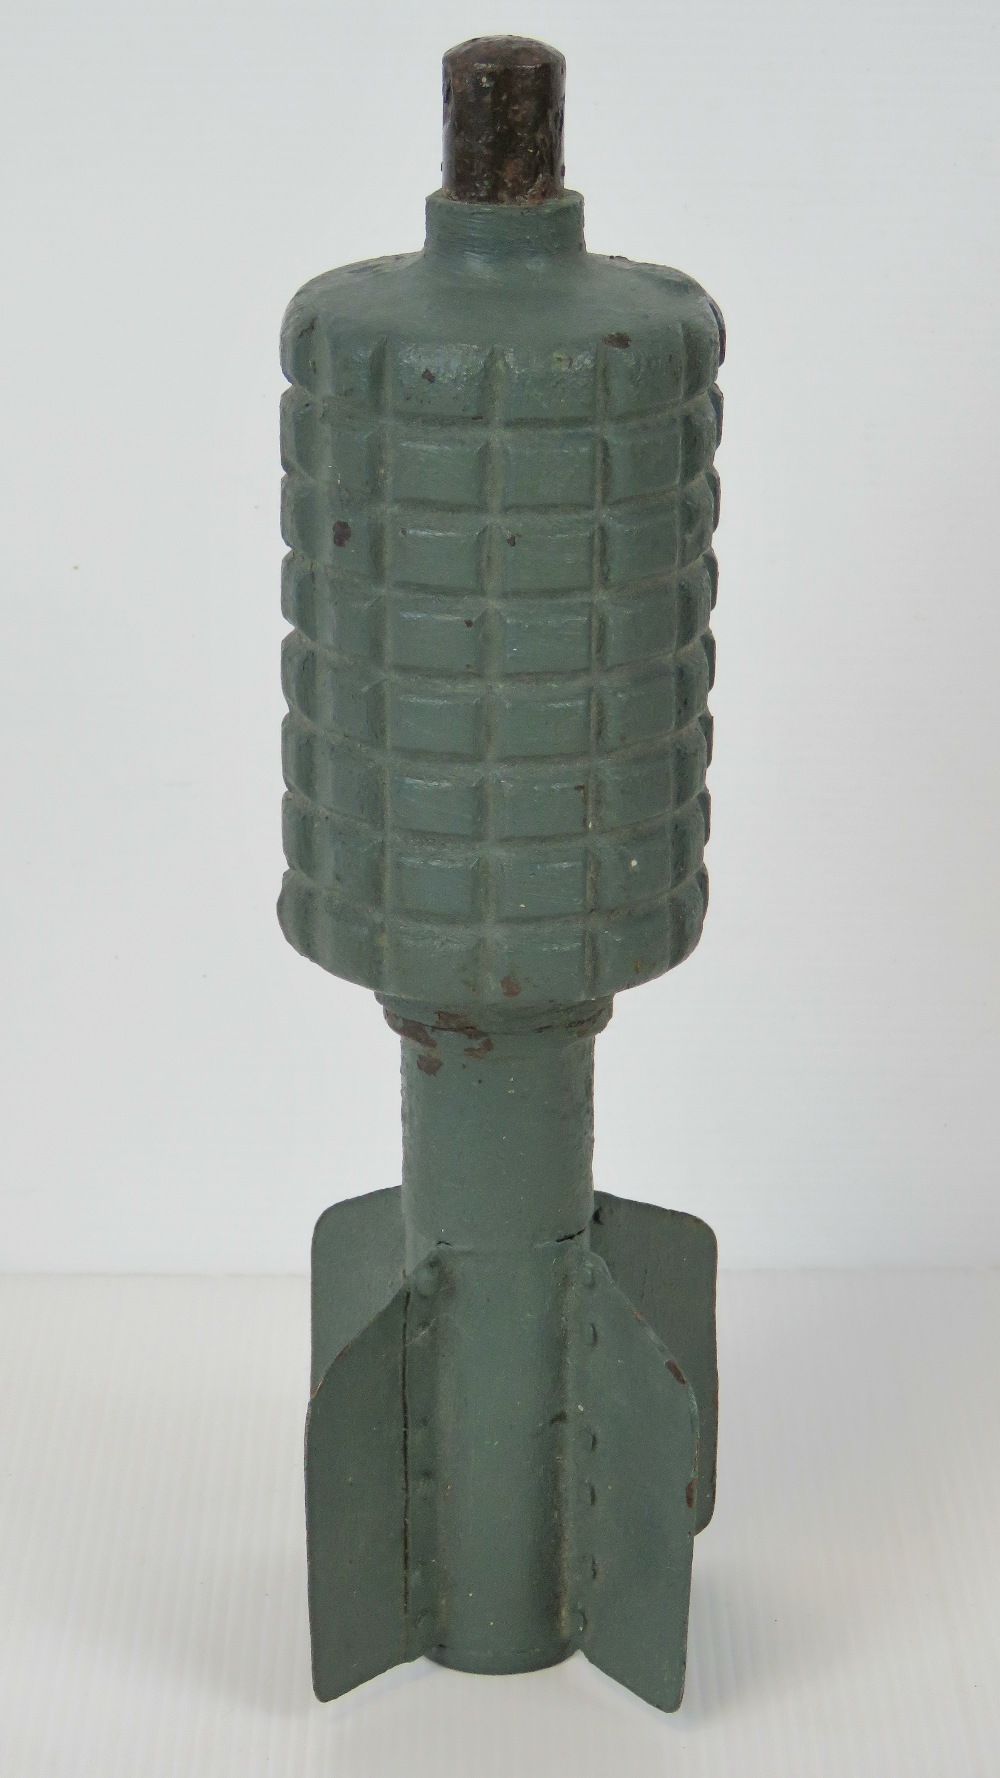 A WWI German Granatwerfer trench mortar